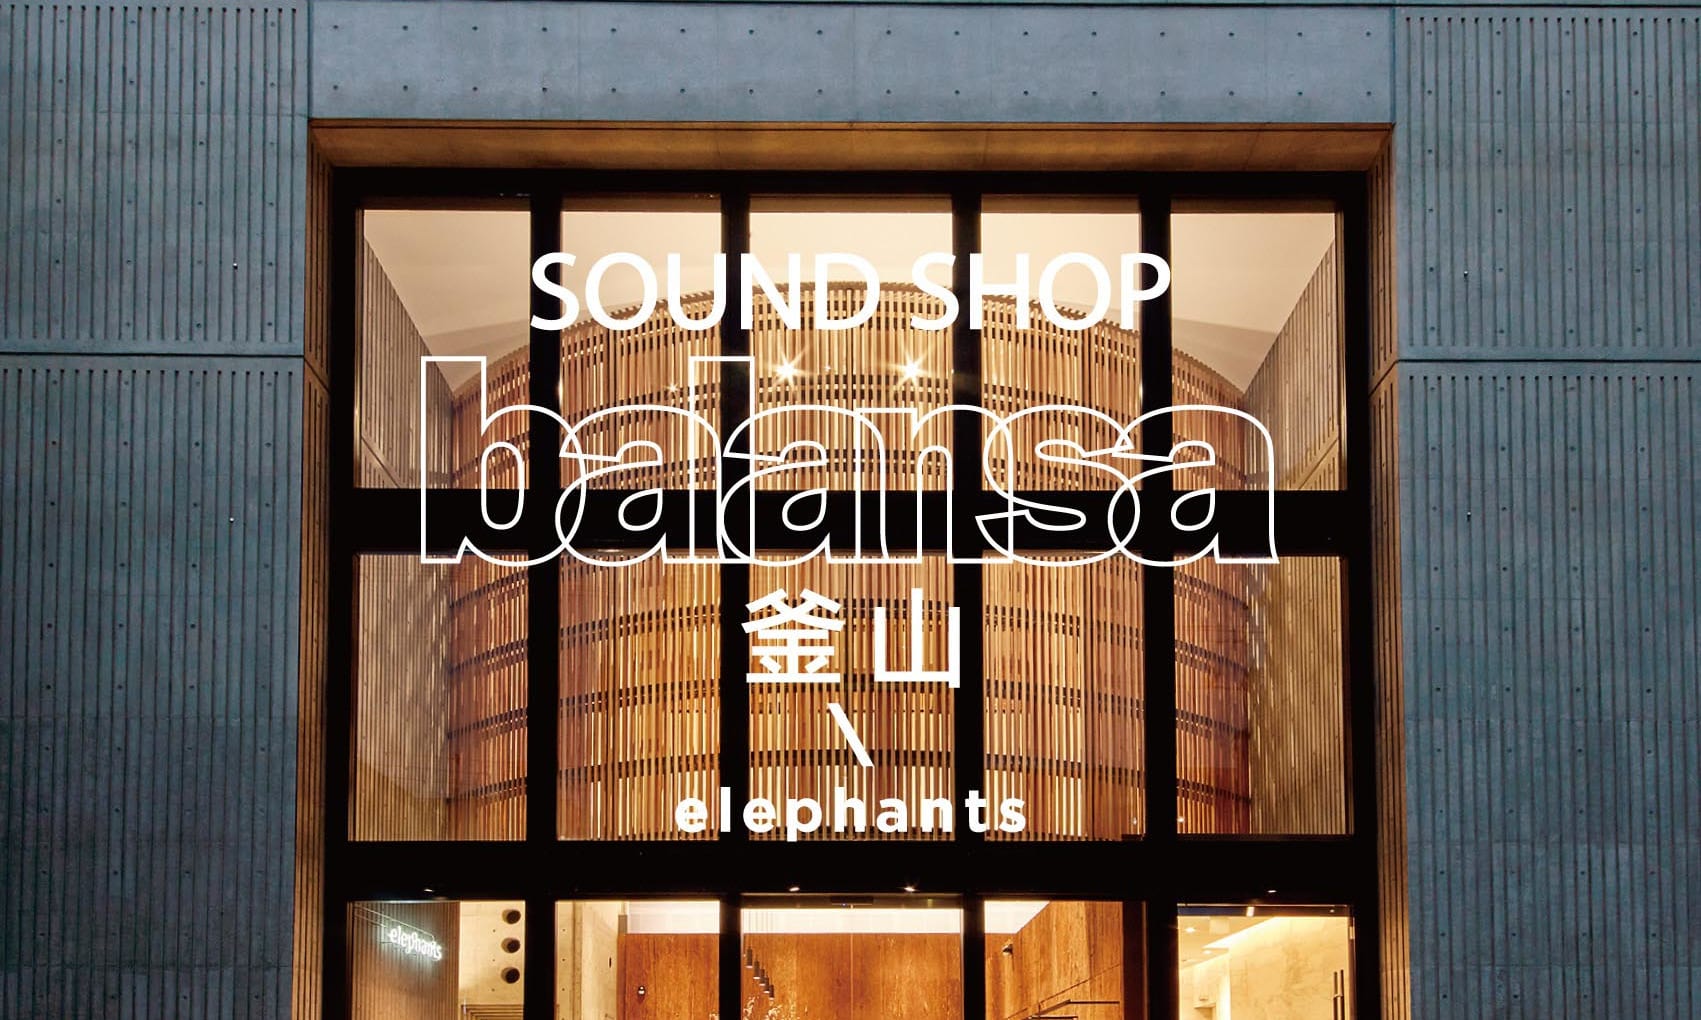 SOUND SHOP balansa、京都のelephantsでパロディロゴコレクションを限定発売